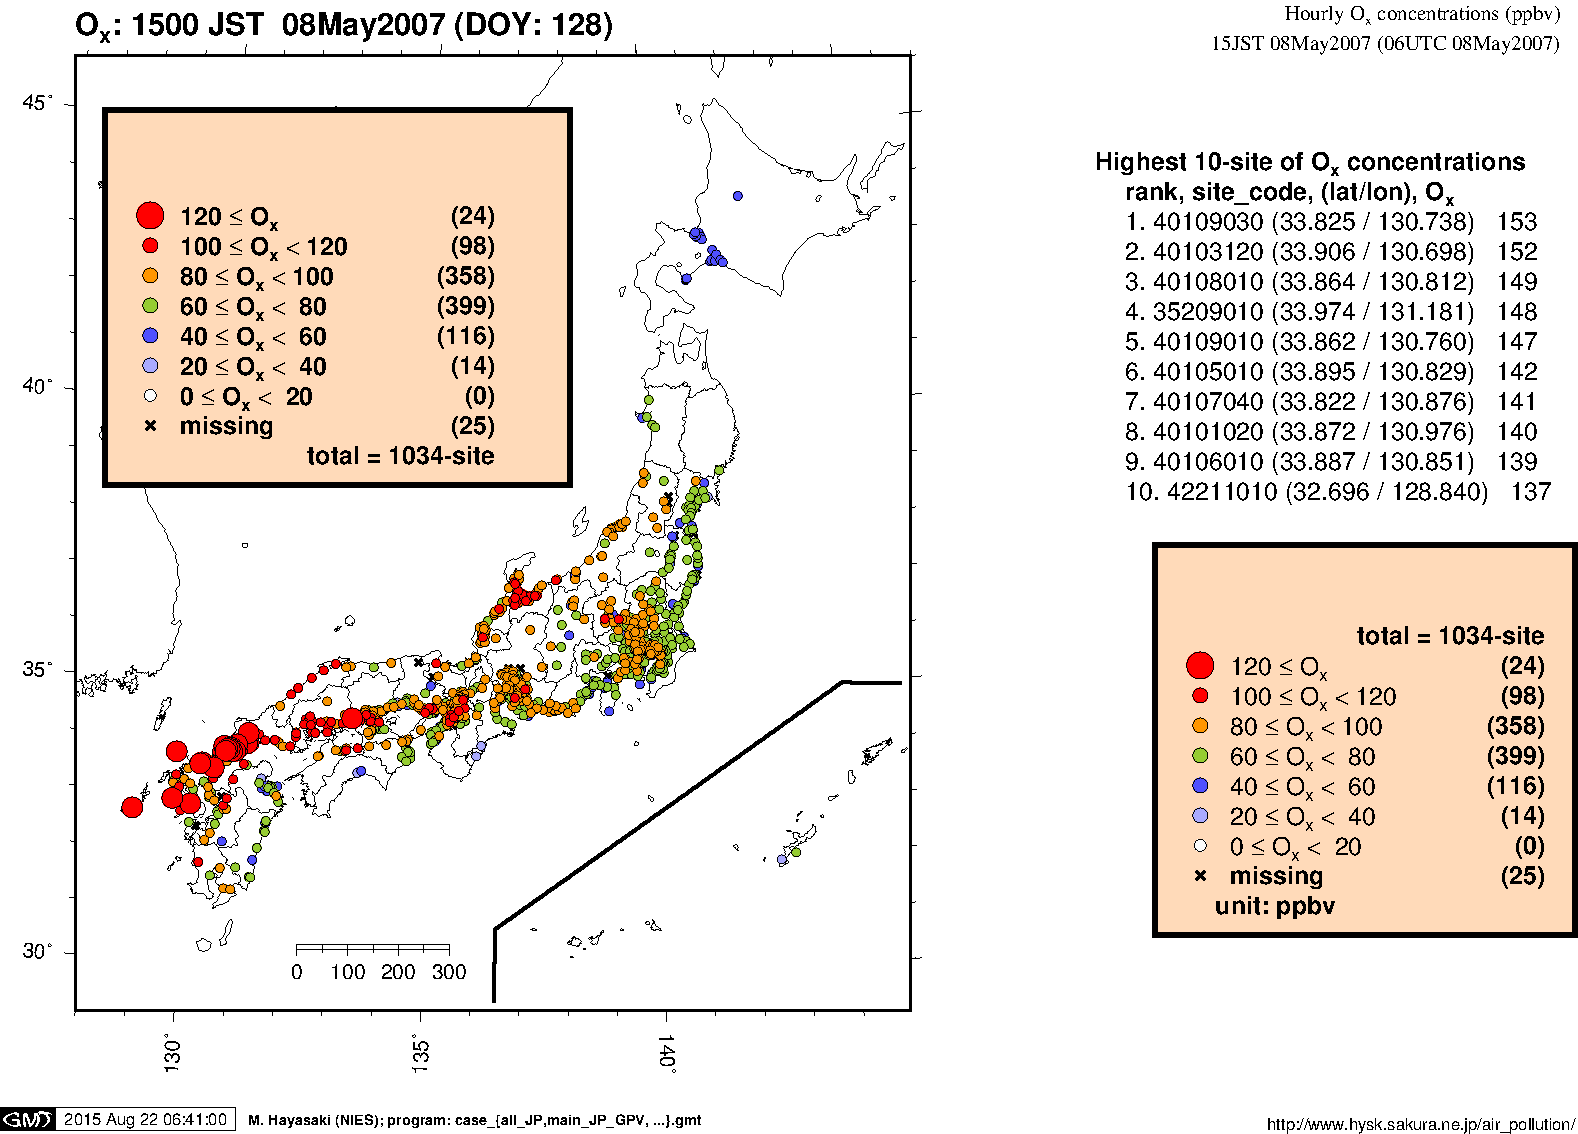 Ox concentration in Japan (15JST 08Mar2007)